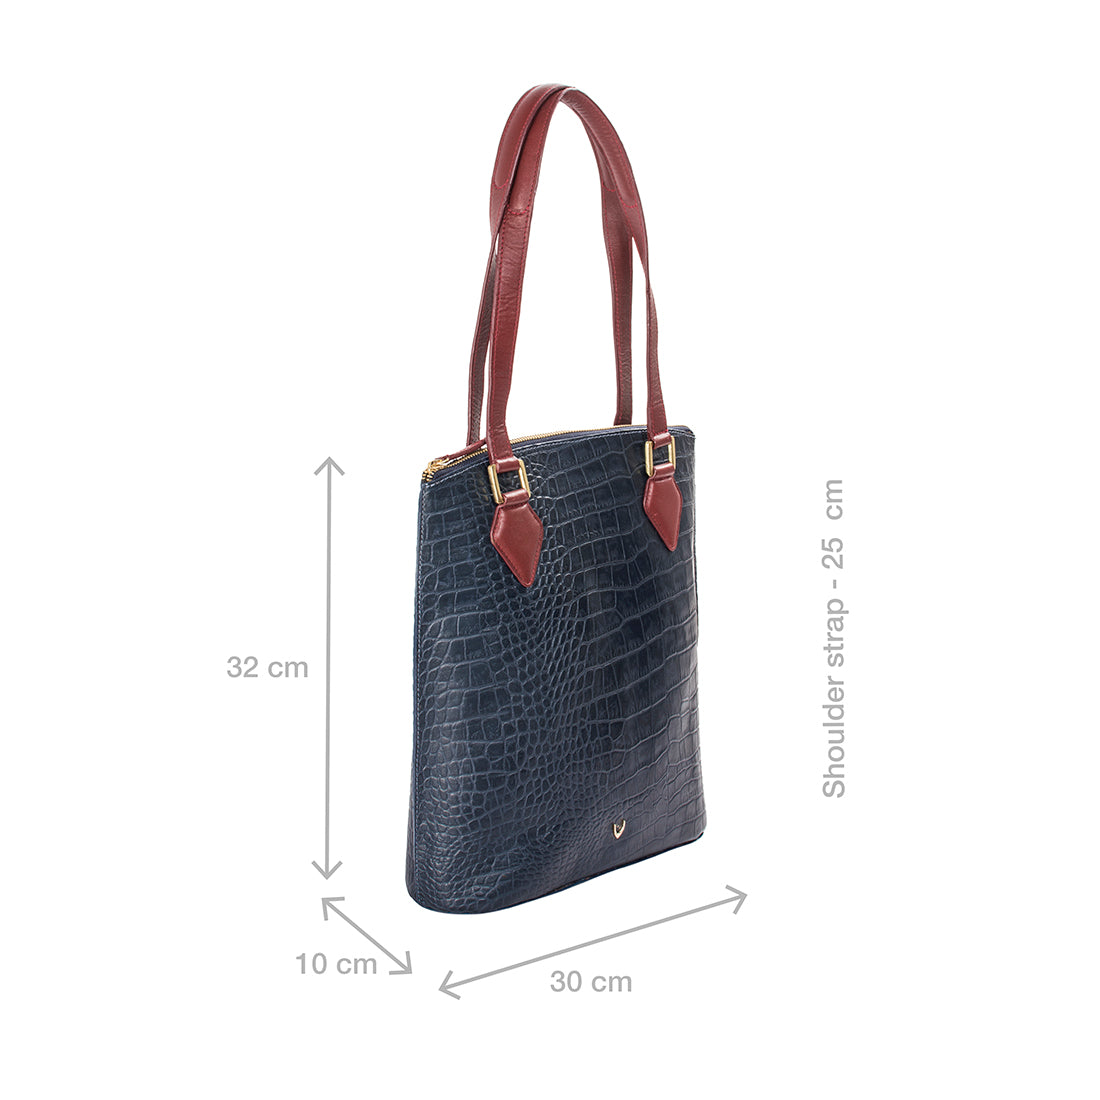 Buy HIDESIGN Bille 02 Zipper Closure Leather Womens Formal Hobo Handbag